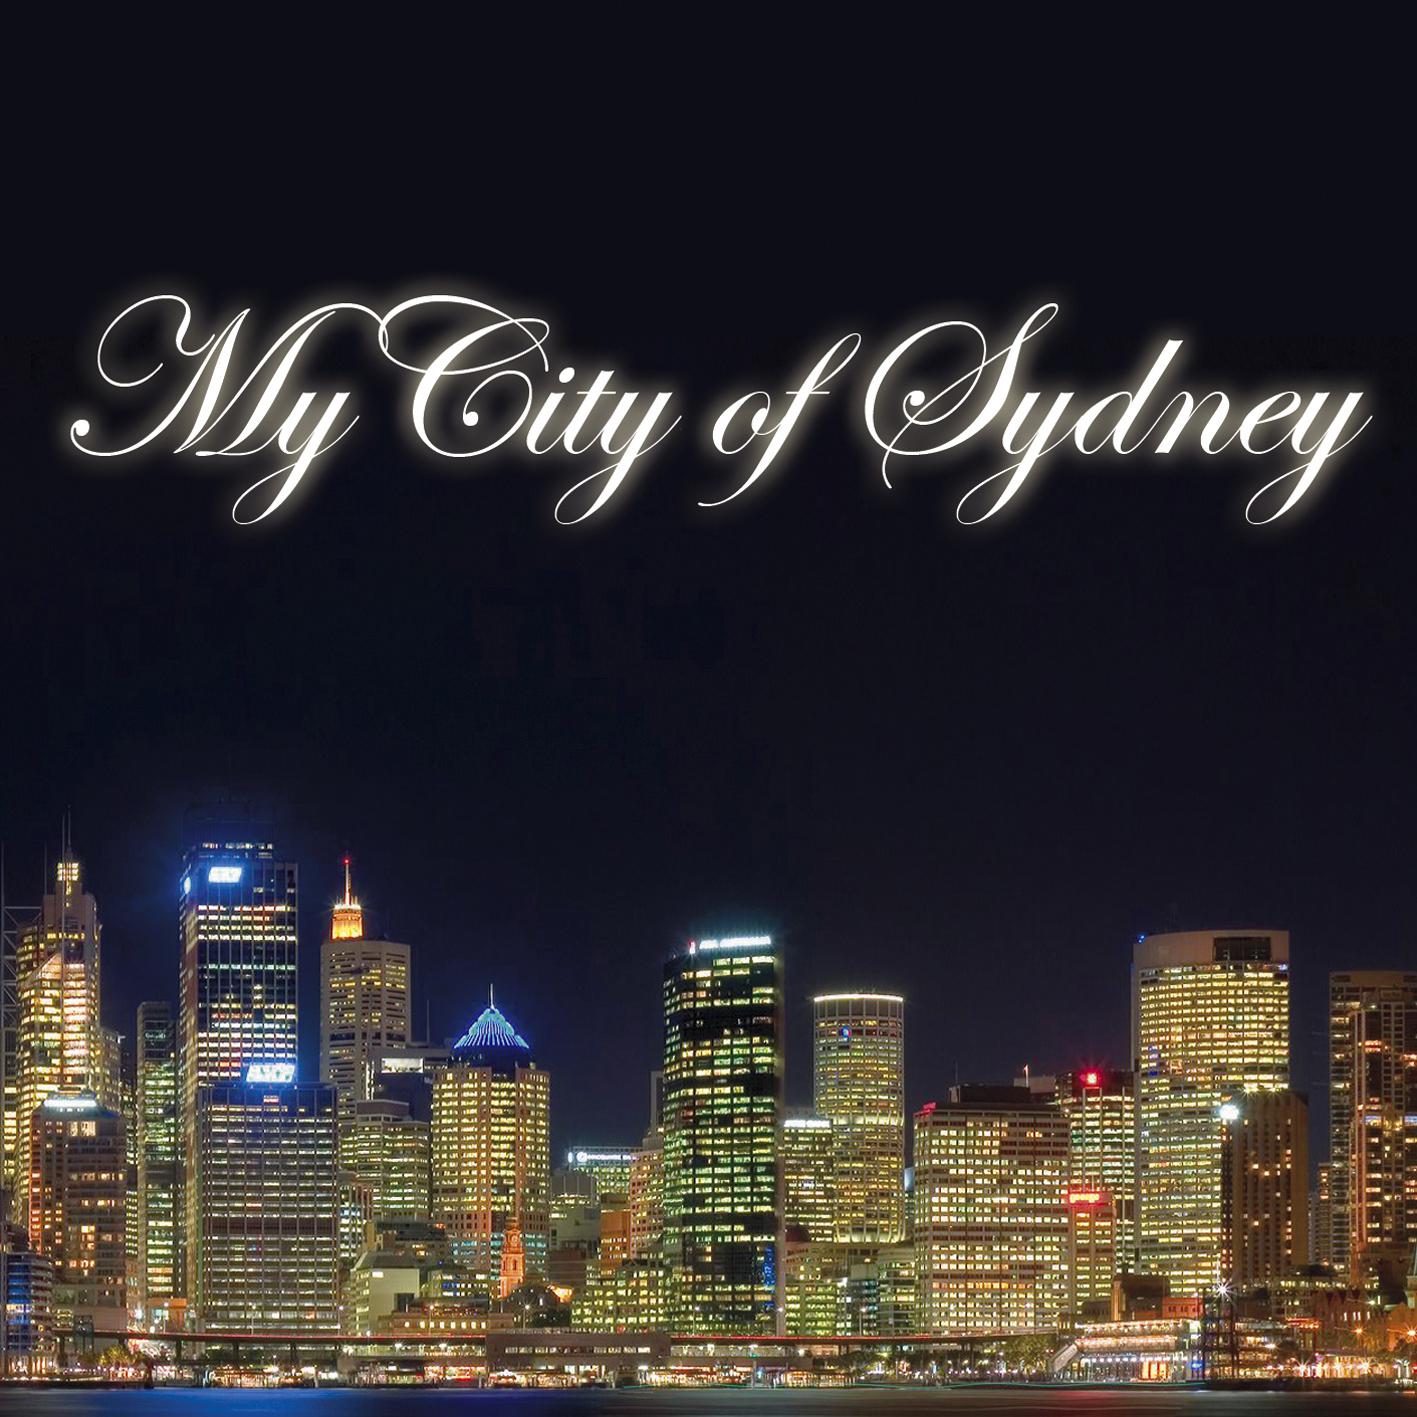 My City of Sydney